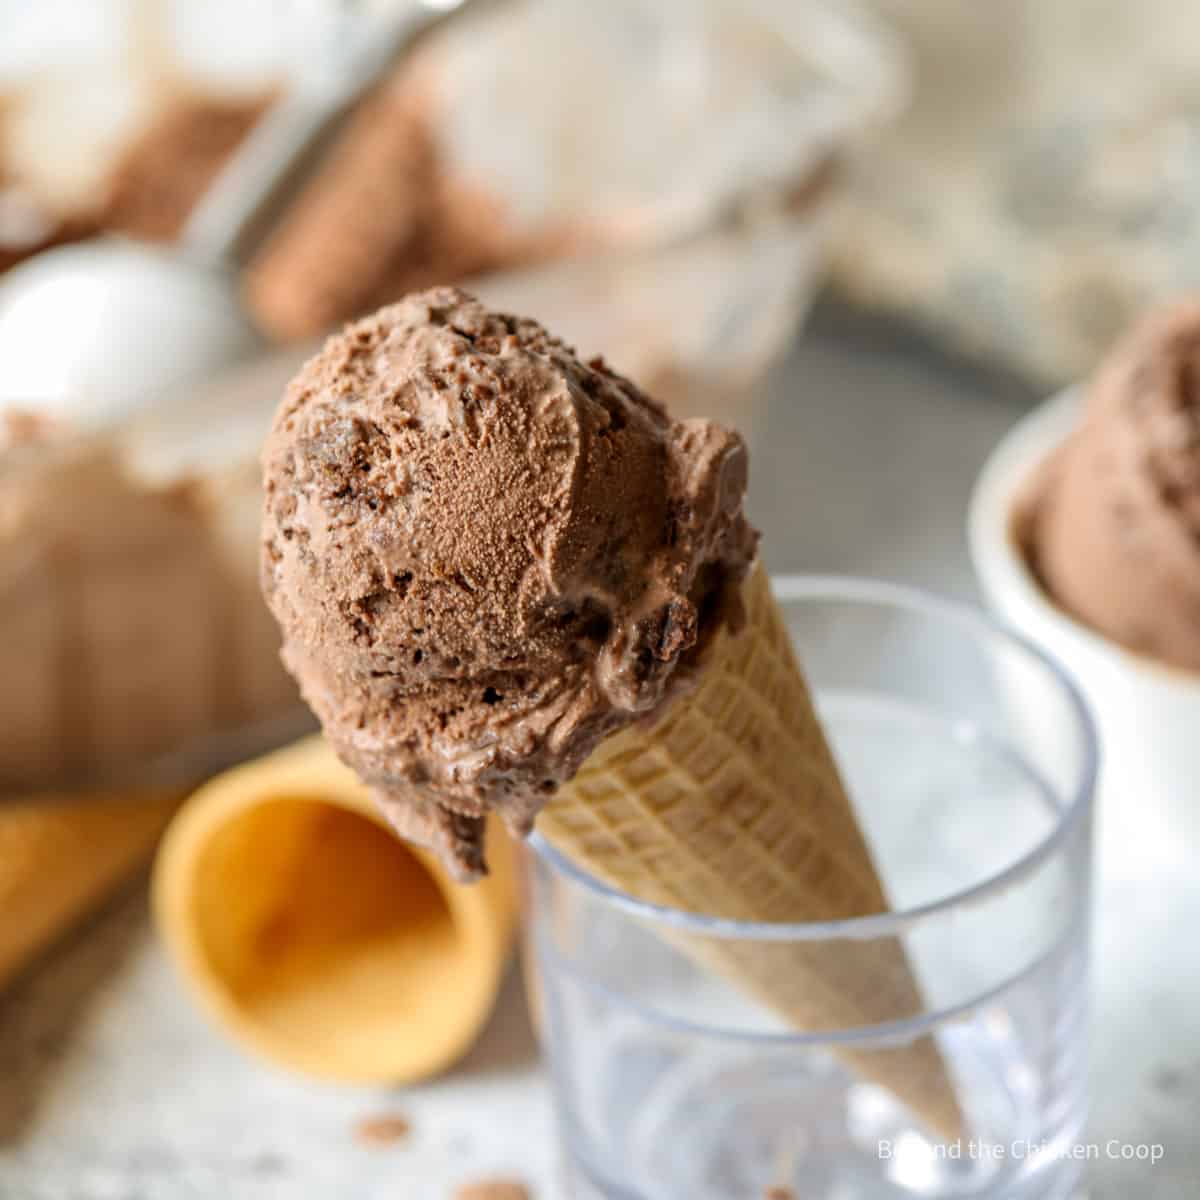 A scoop of chocolate ice cream in a sugar cone. 